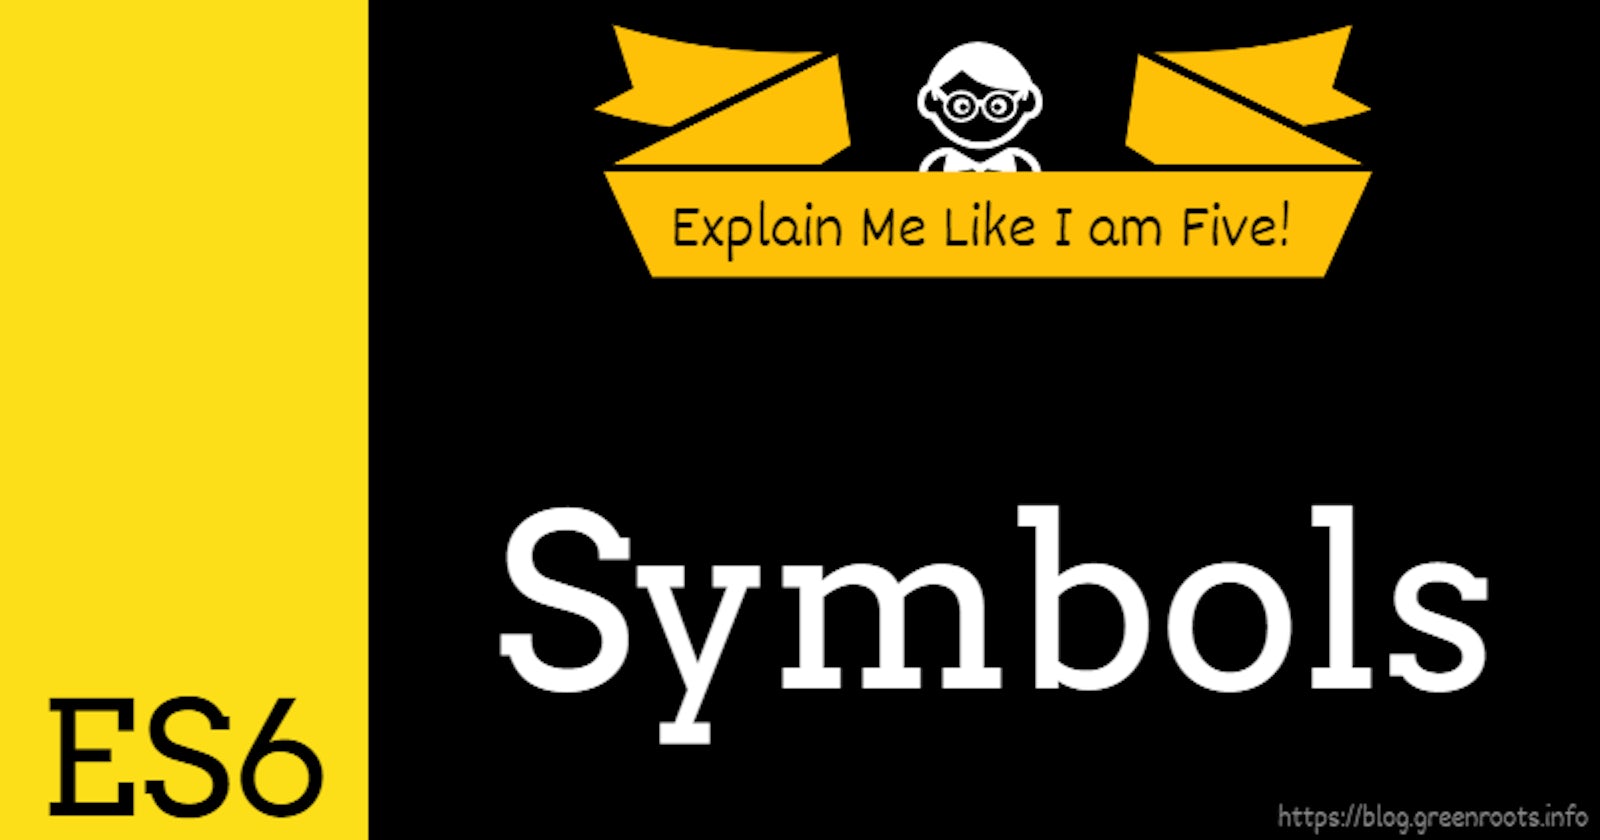 Explain Me Like I am Five: What are ES6 Symbols?